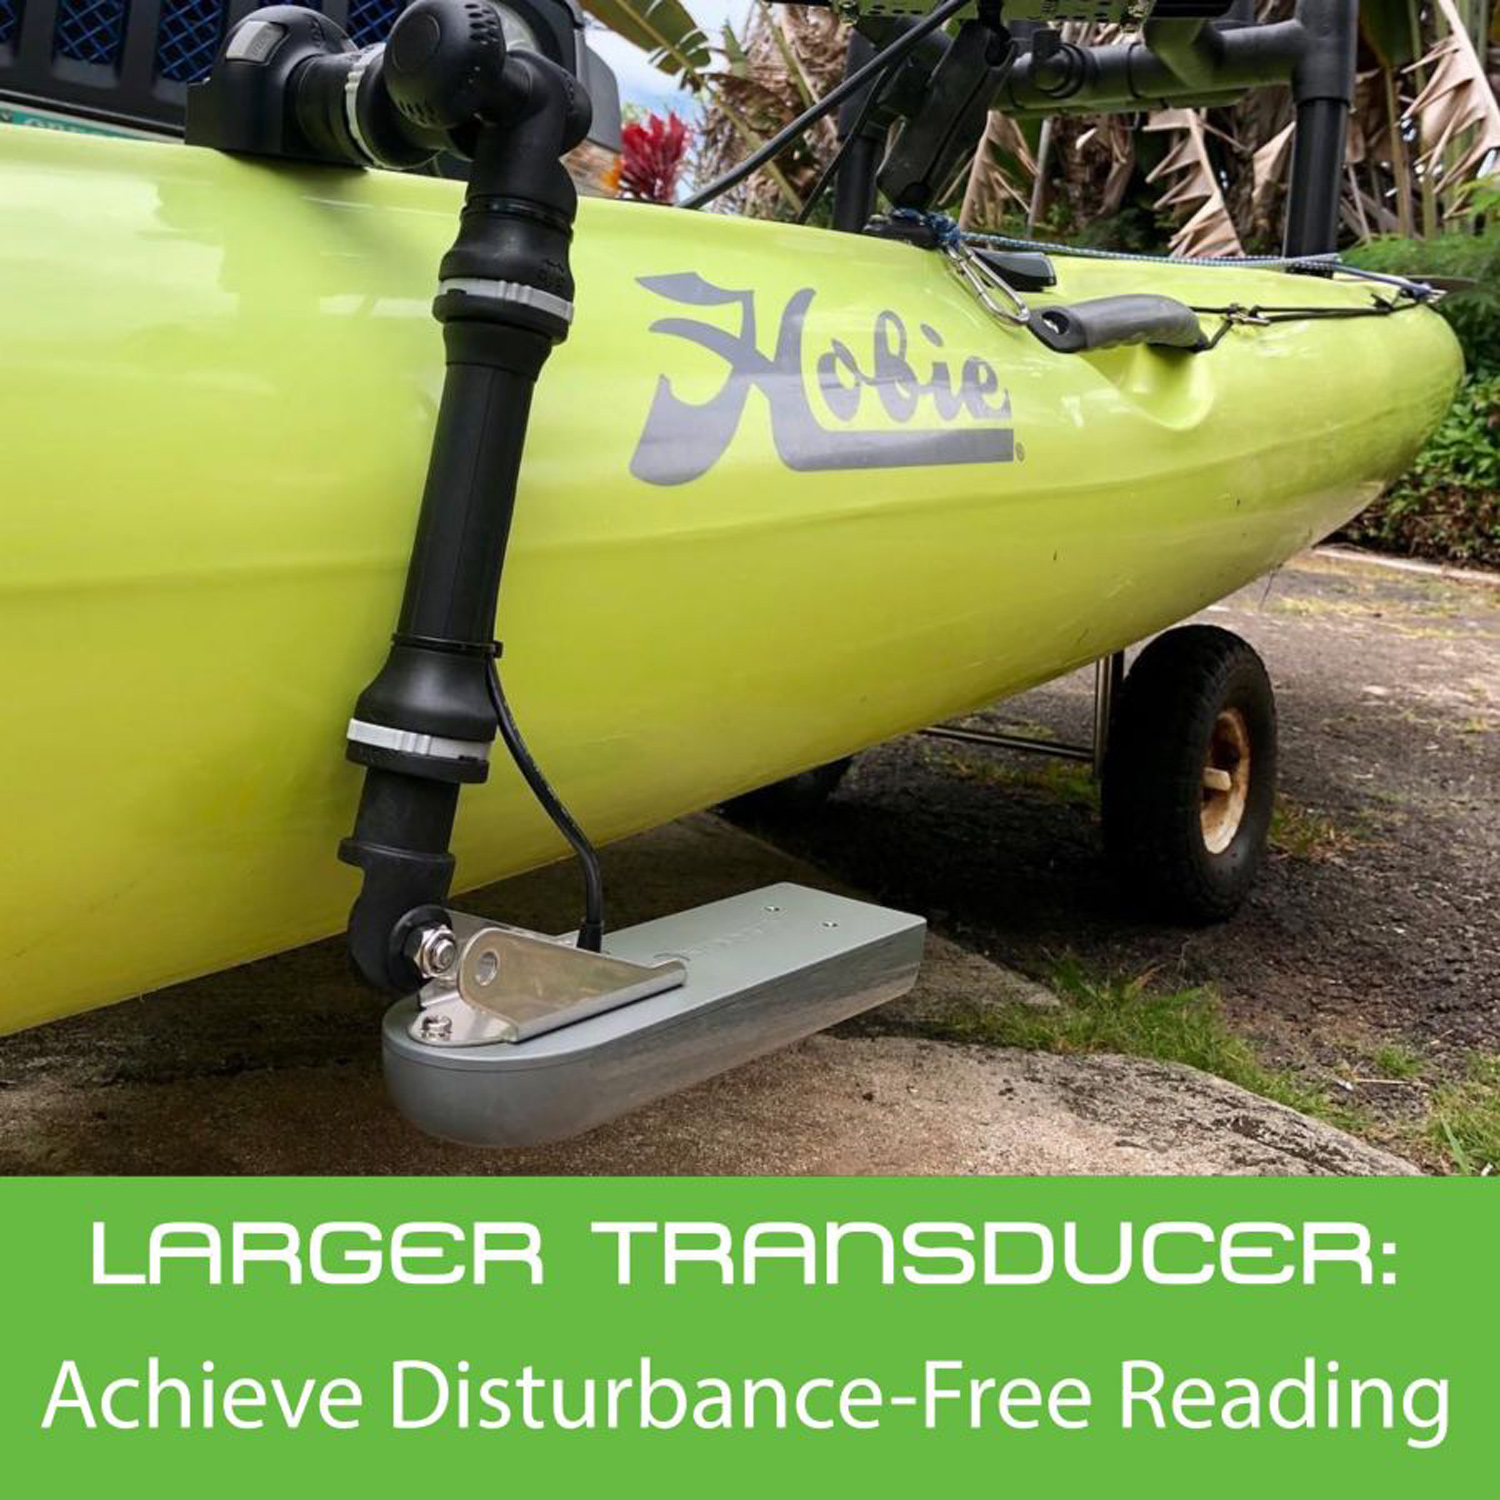 RAILBLAZA Mounts & Accessories For Hobie Kayaks RAILBLAZA